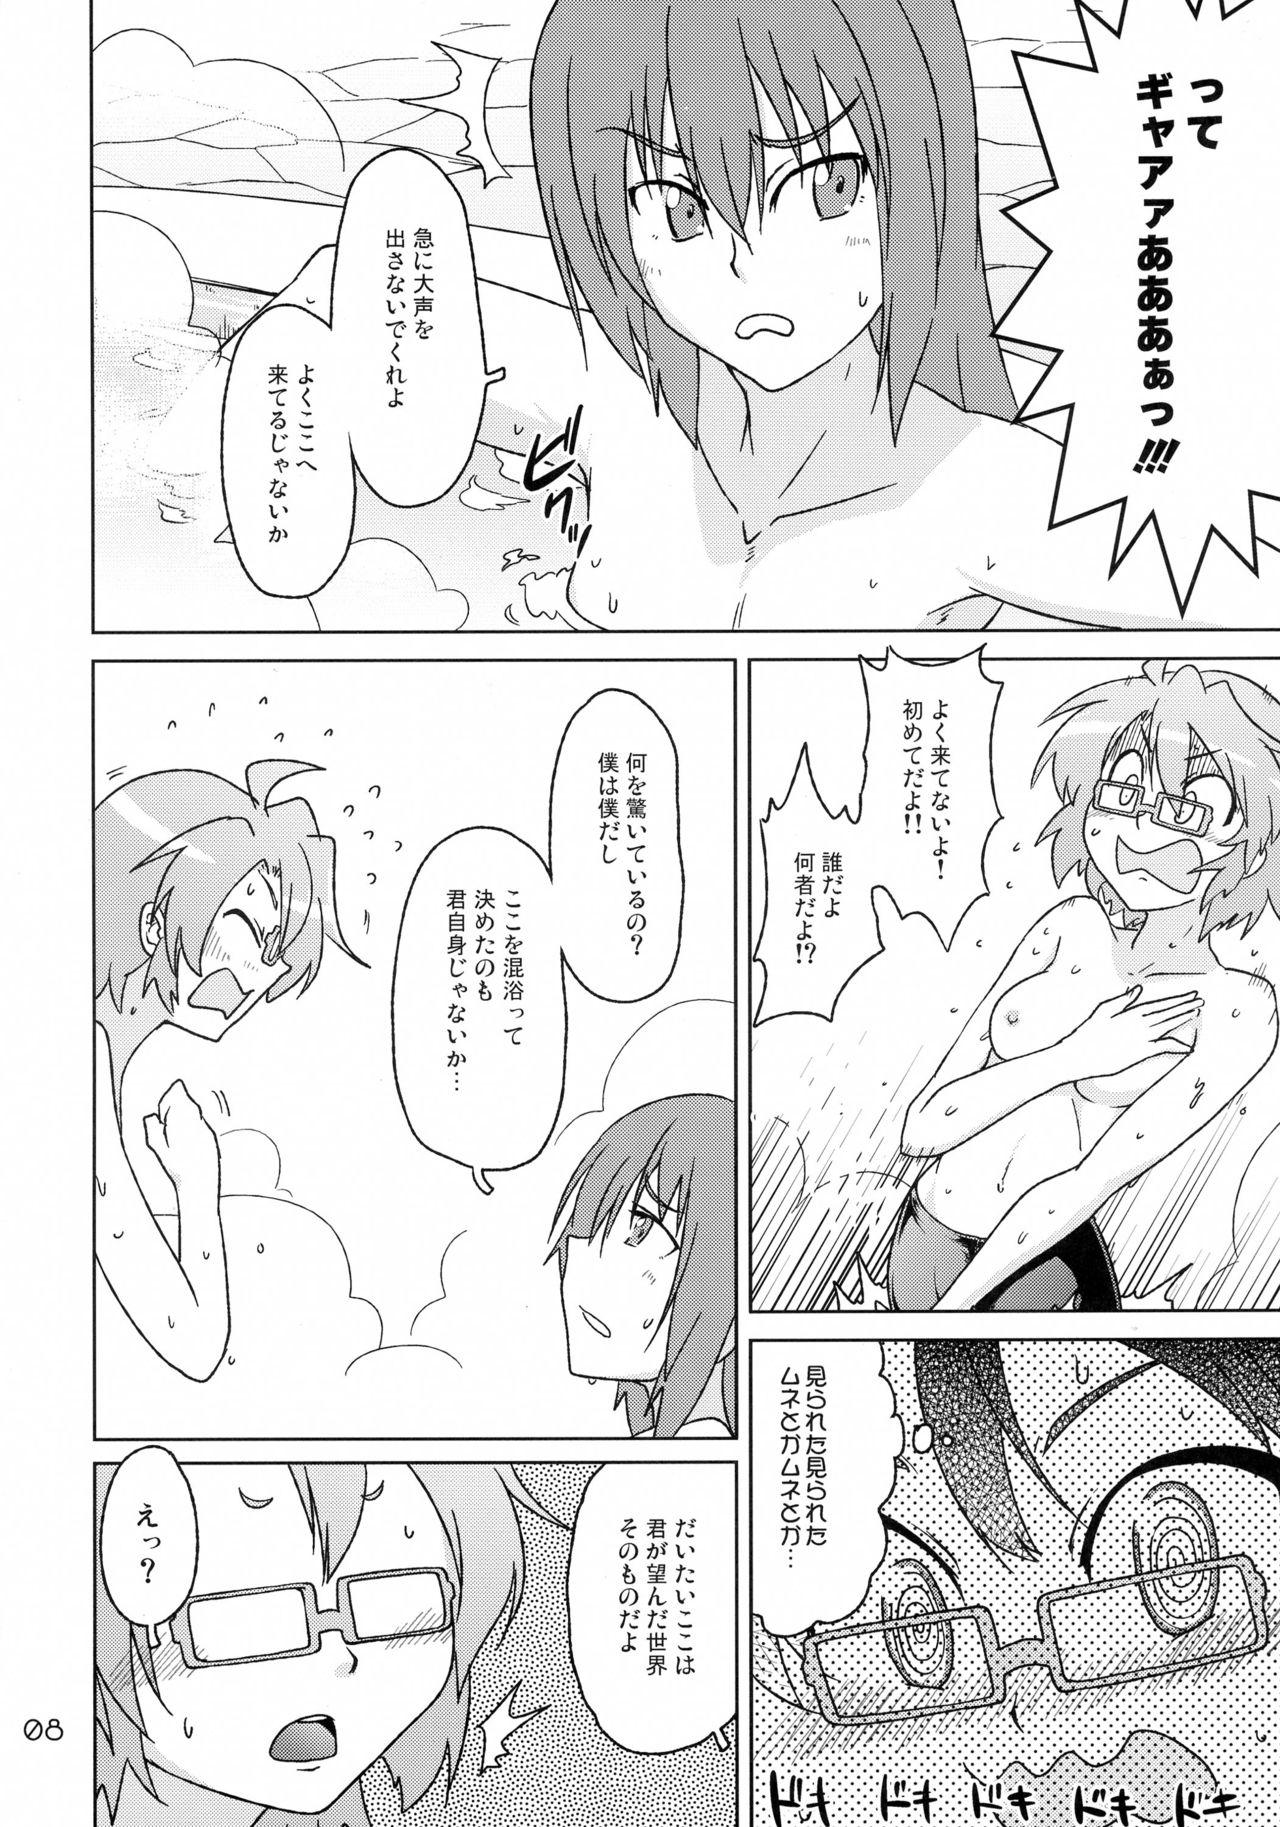 Infiel Ofuro-ba de Spats - Houkago no pleiades Lovers - Page 8